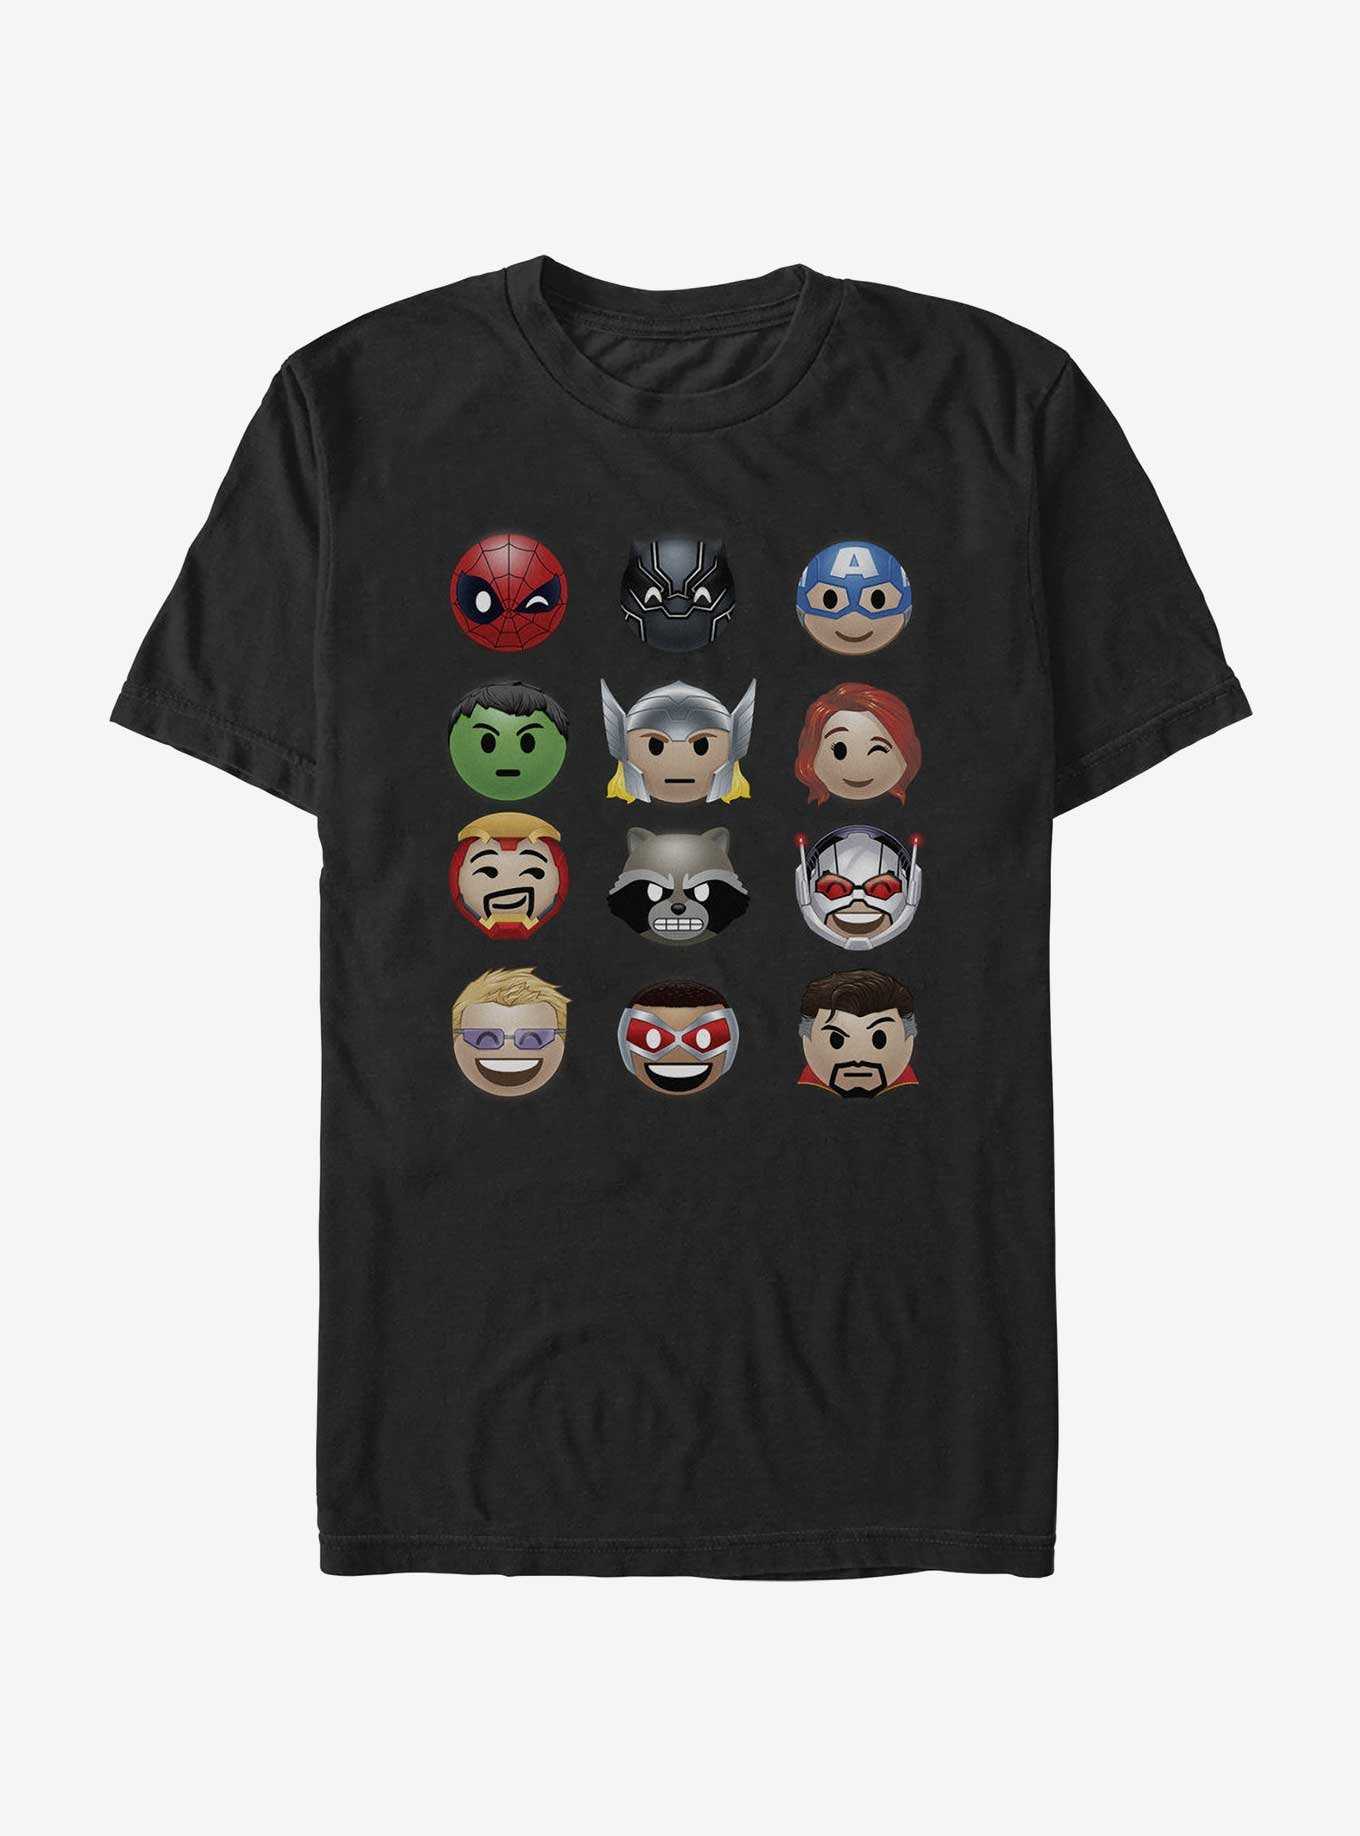 Marvel Avengers Chibi Characters T-Shirt, , hi-res